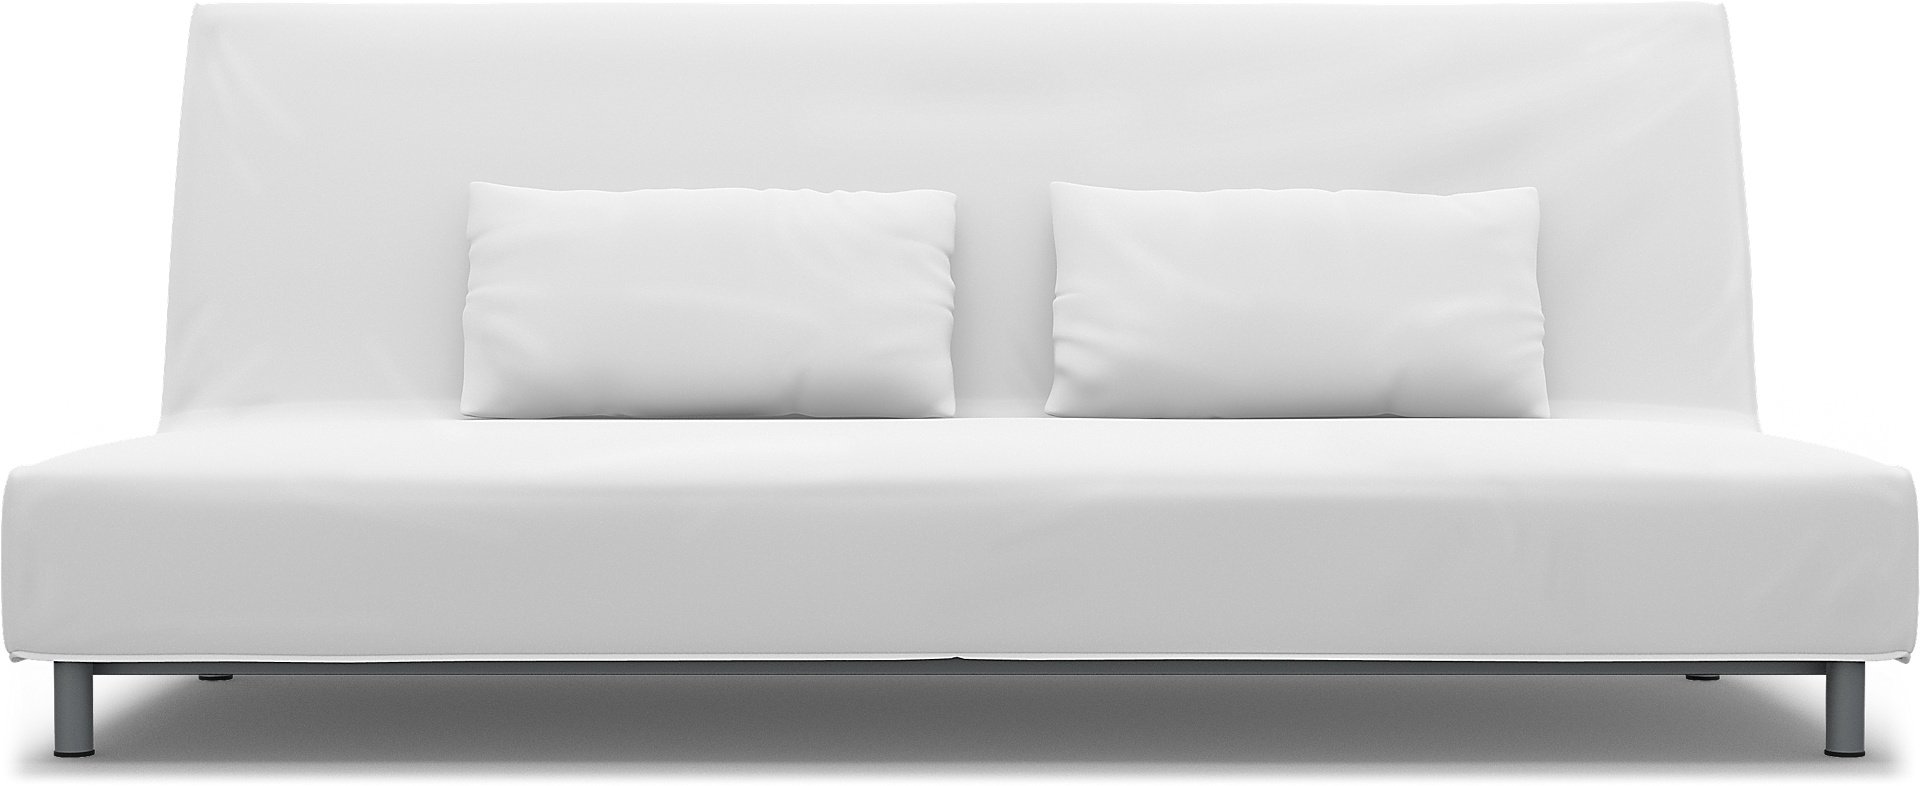 IKEA - Beddinge Sofa Bed Cover, Absolute White, Linen - Bemz